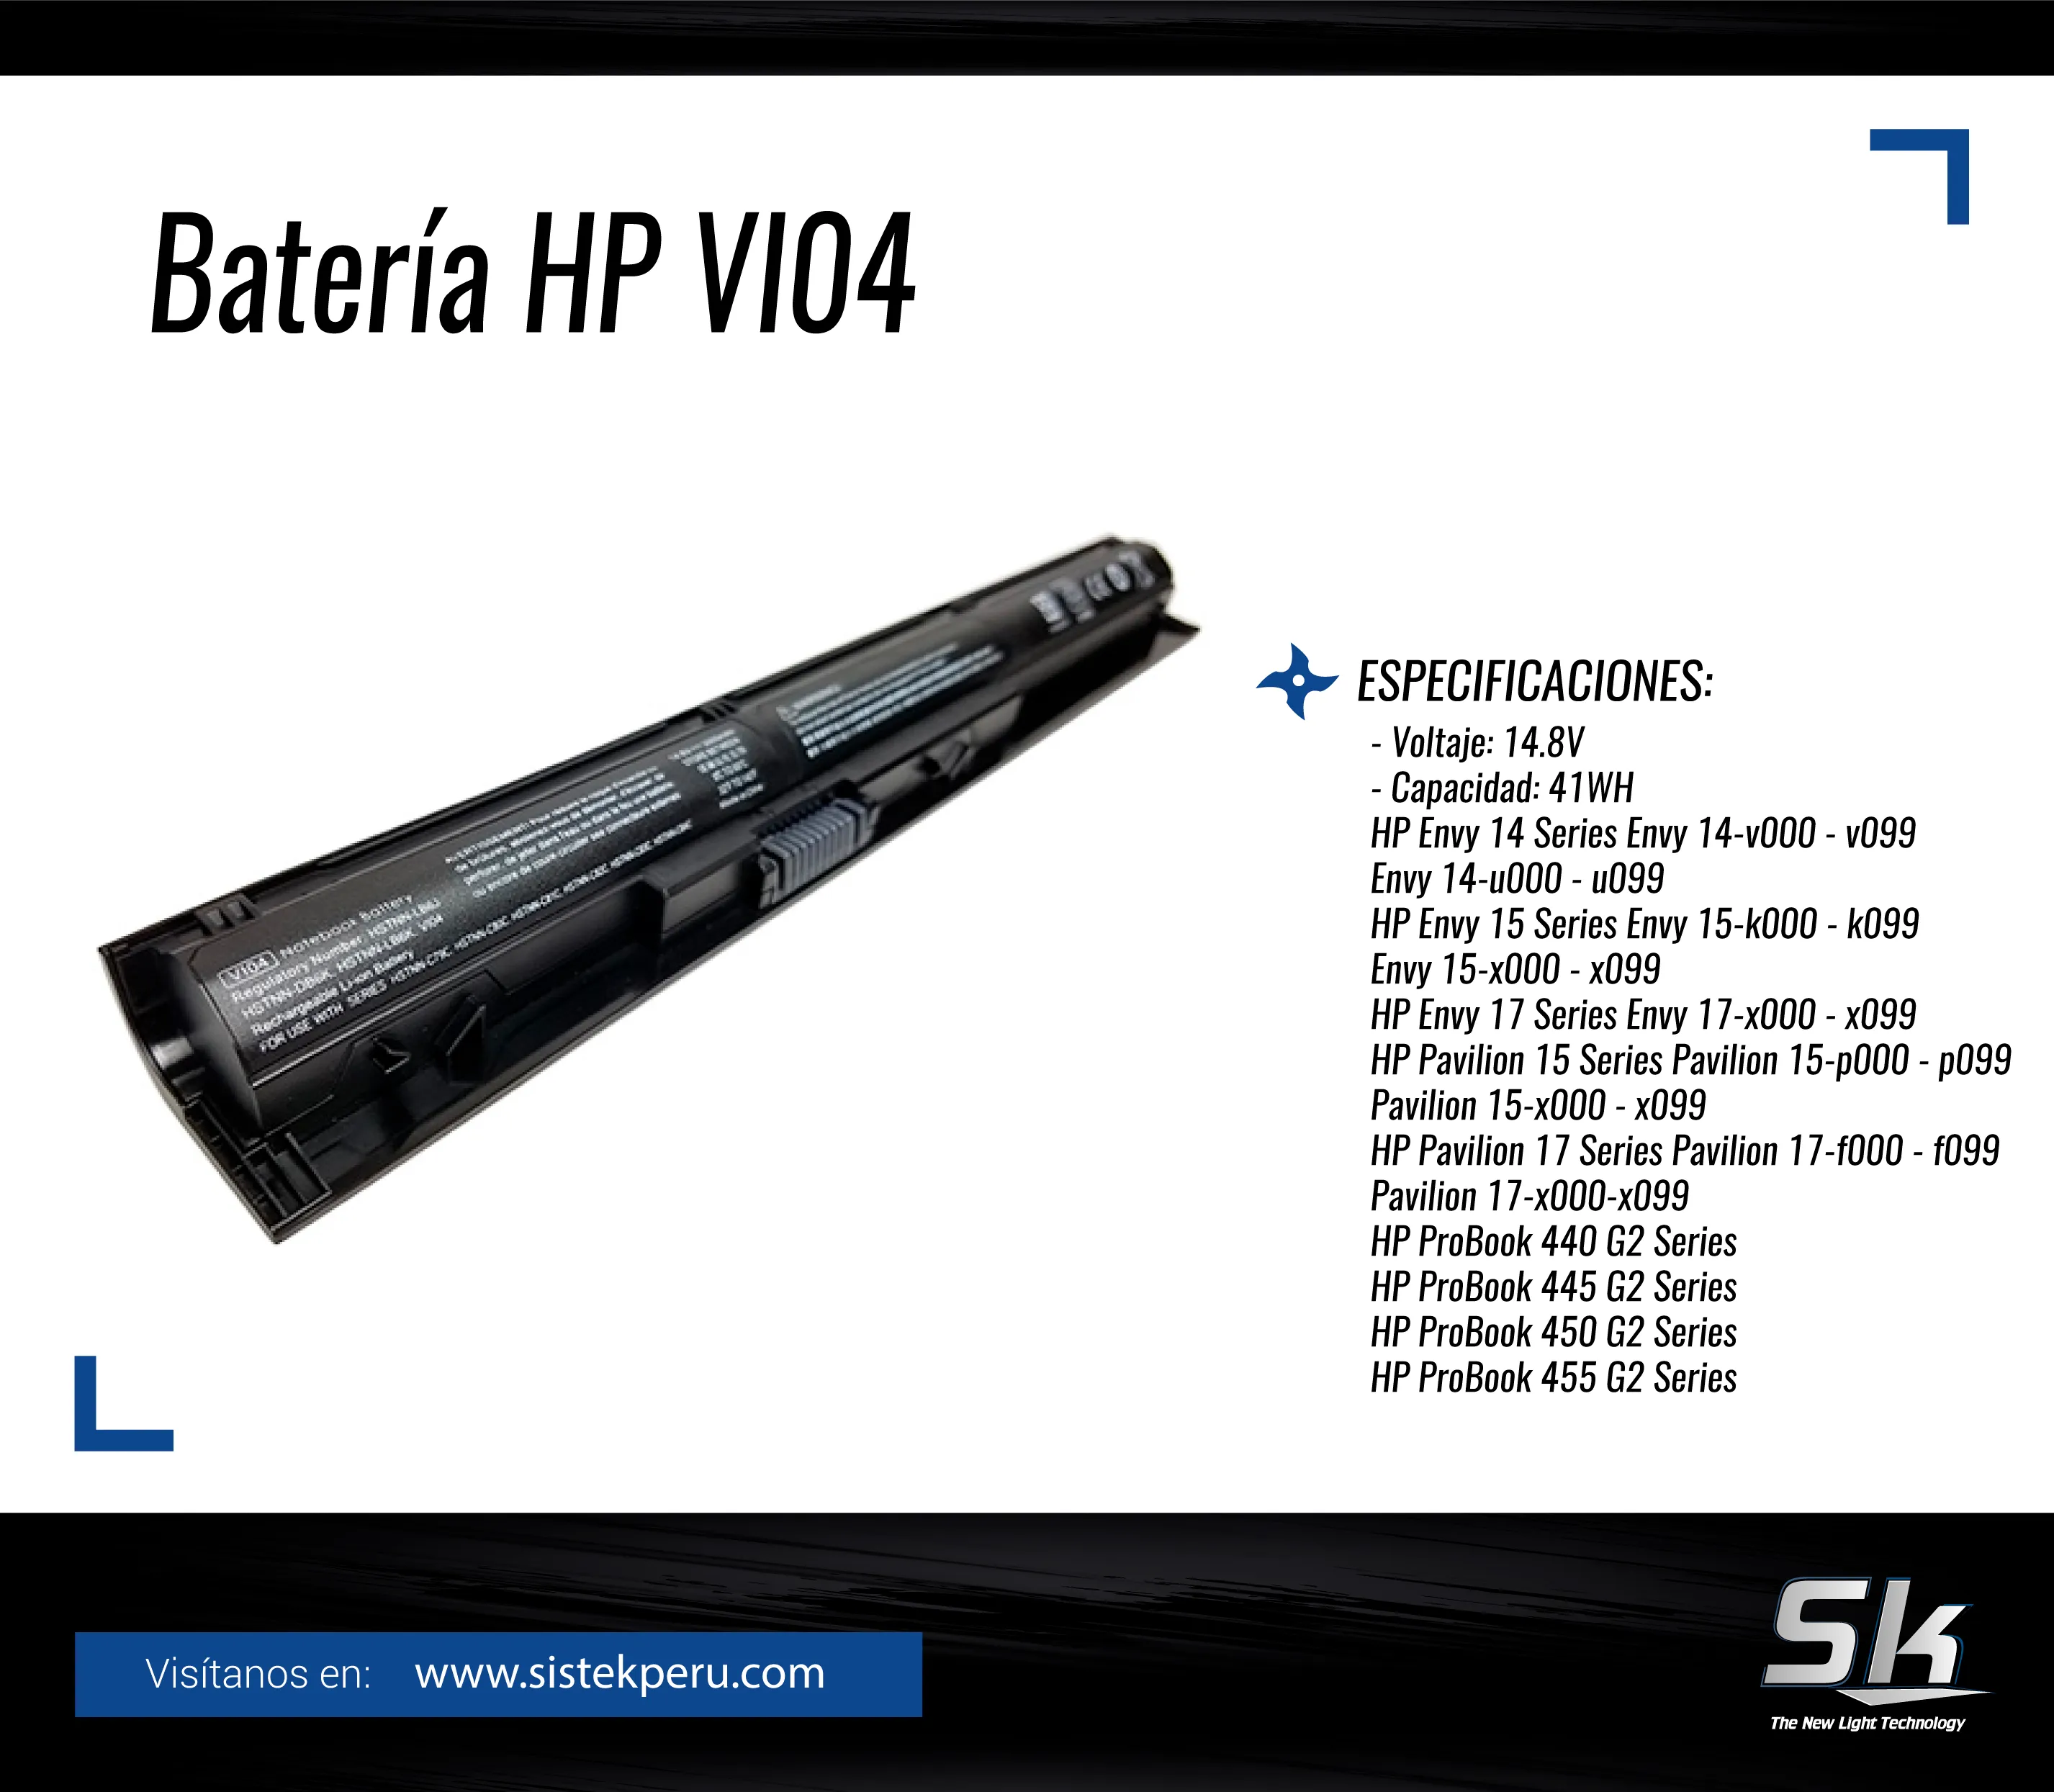 Bateria HP VI04